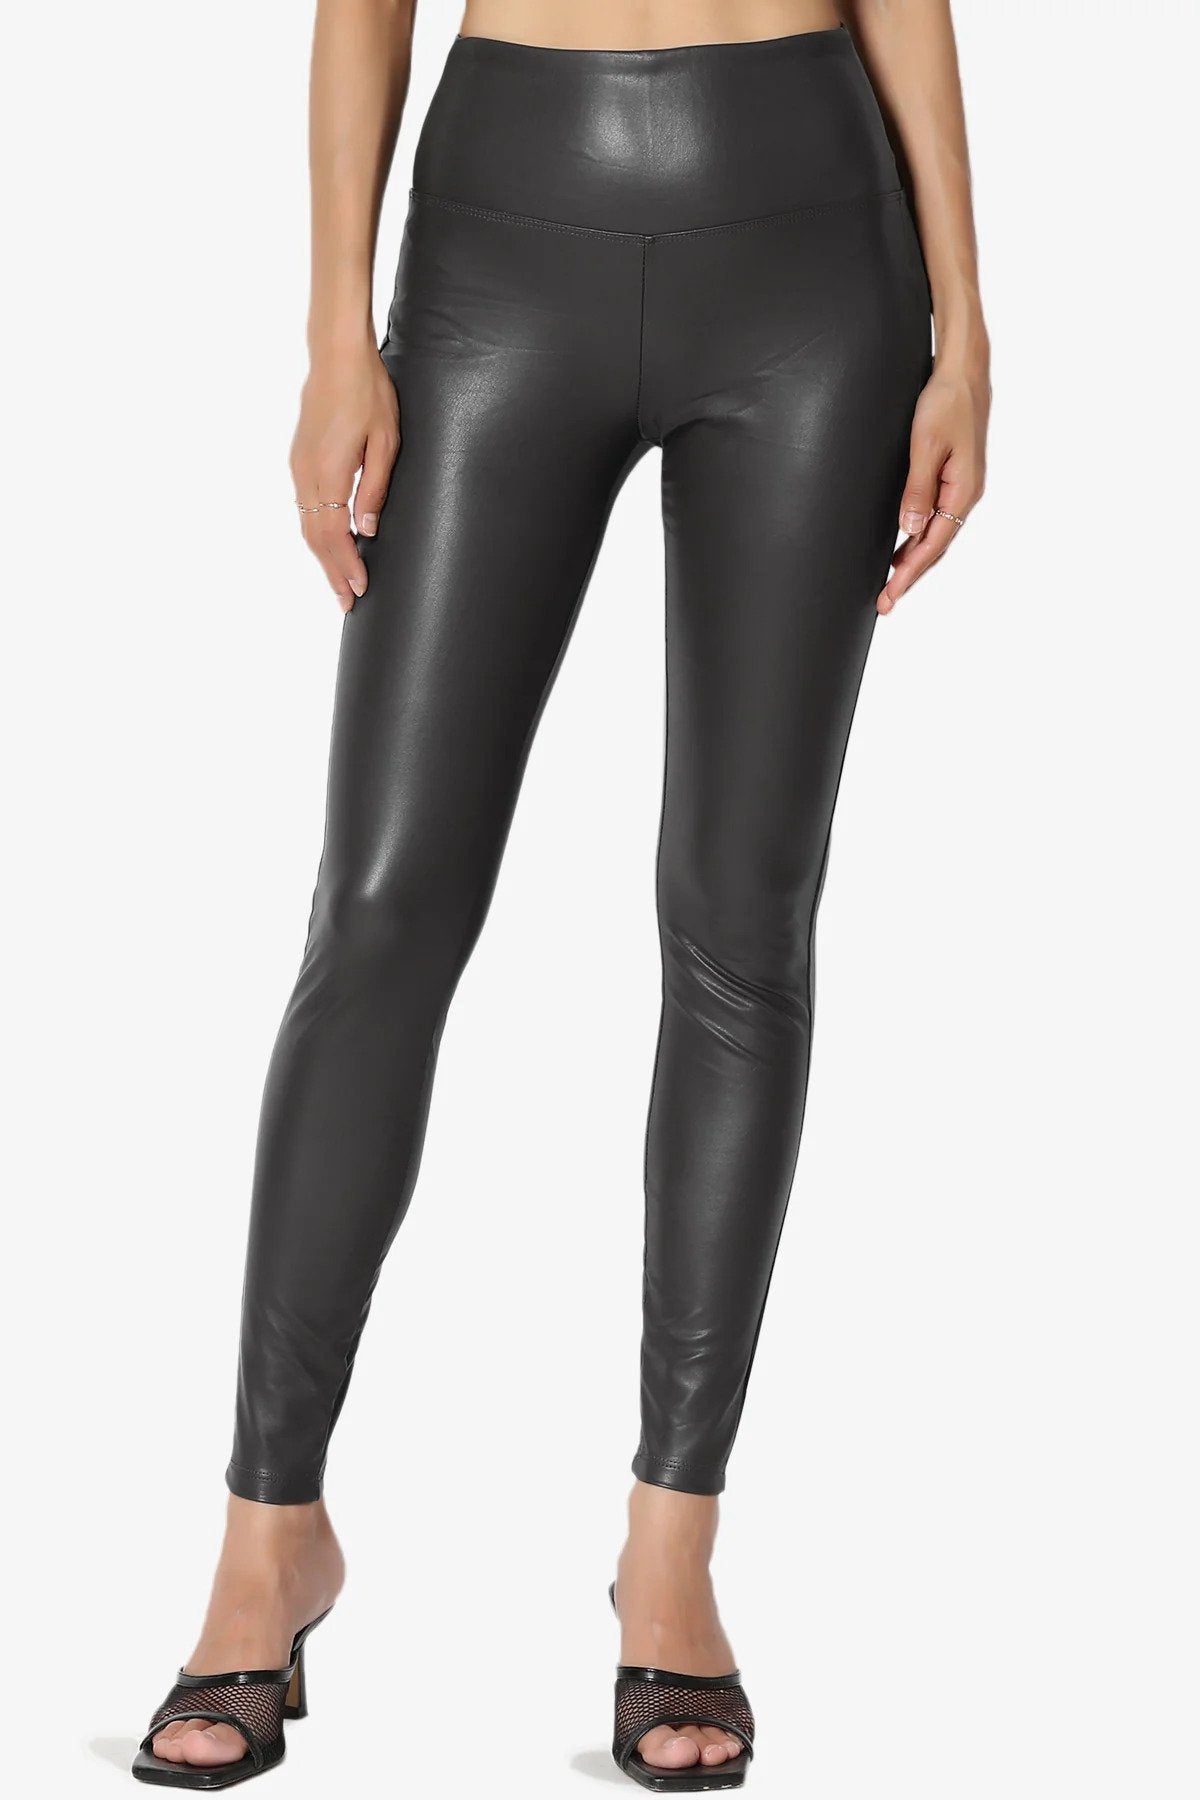 A woman wearing black leather leggings